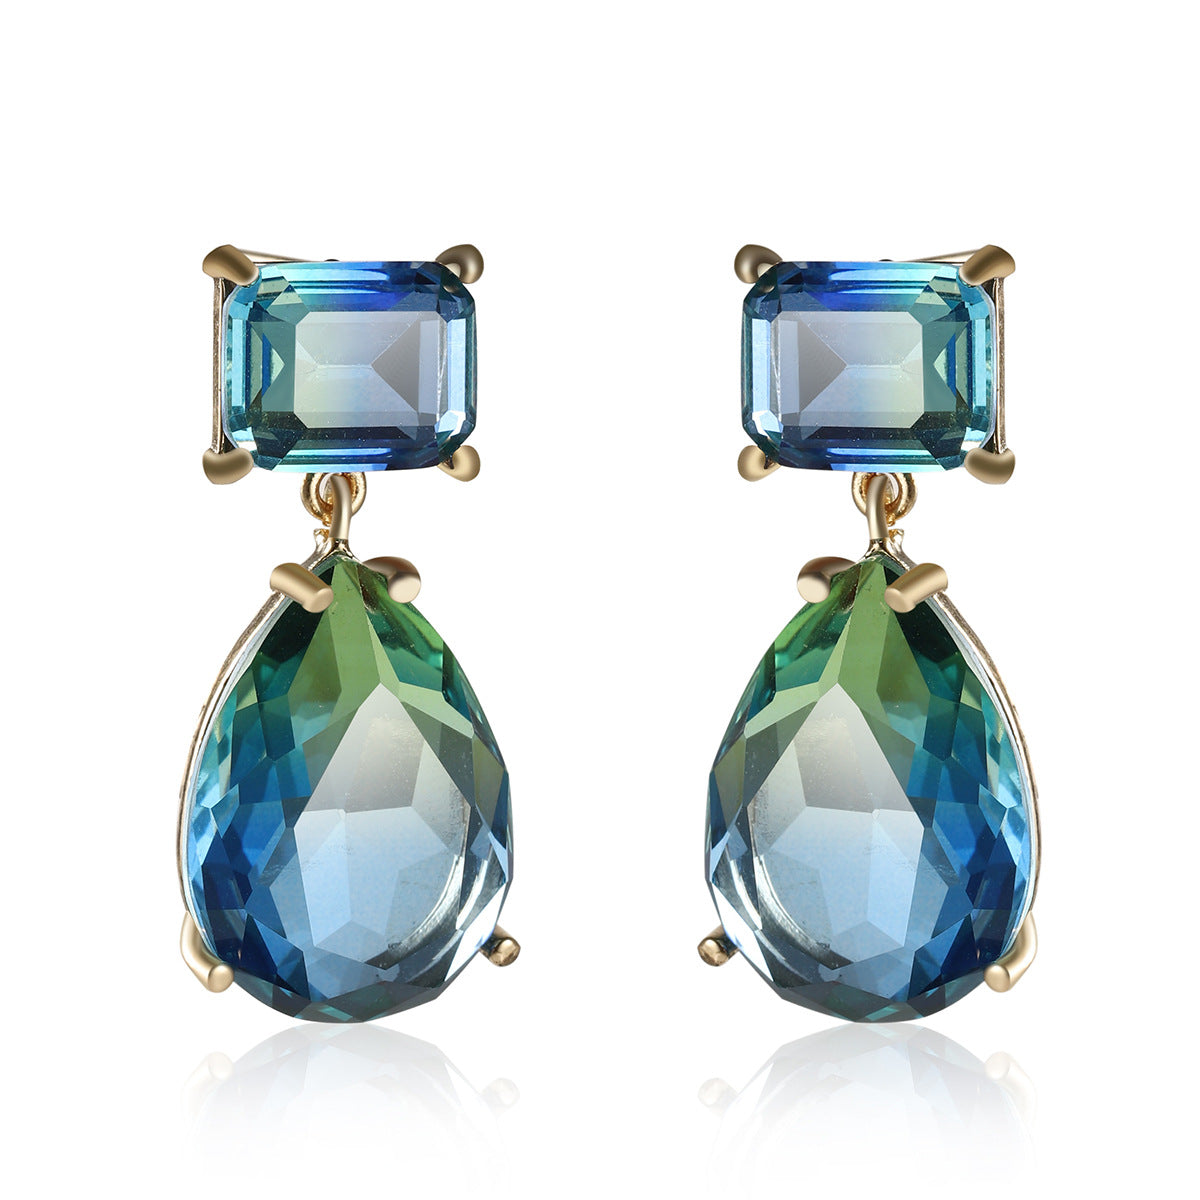 Aqua Blue CZ Crystal Pendant Earrings Set - trinkets.pk